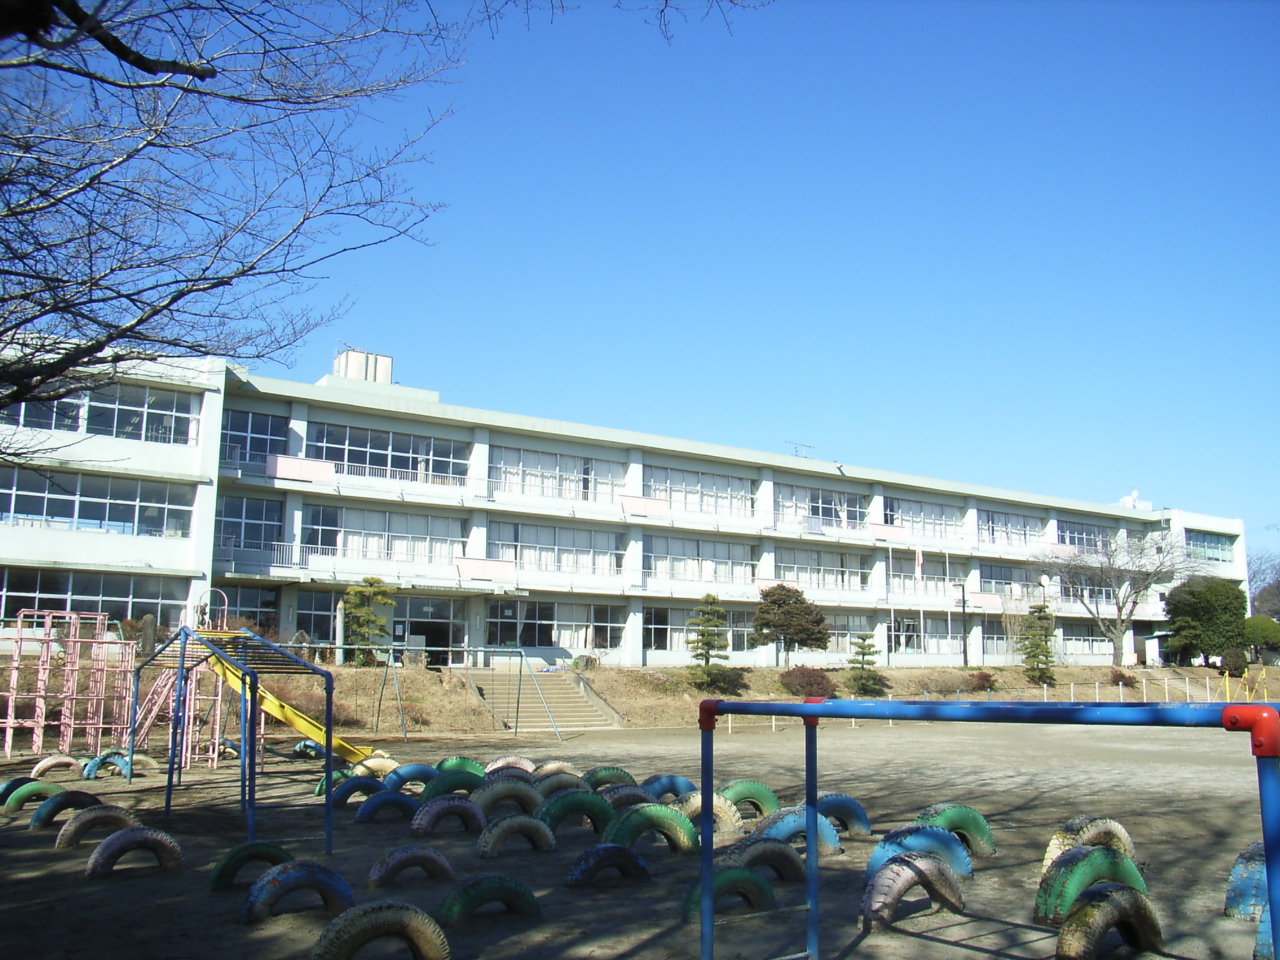 Primary school. 900m until the nephew ball Municipal Ogawa Elementary School (elementary school)